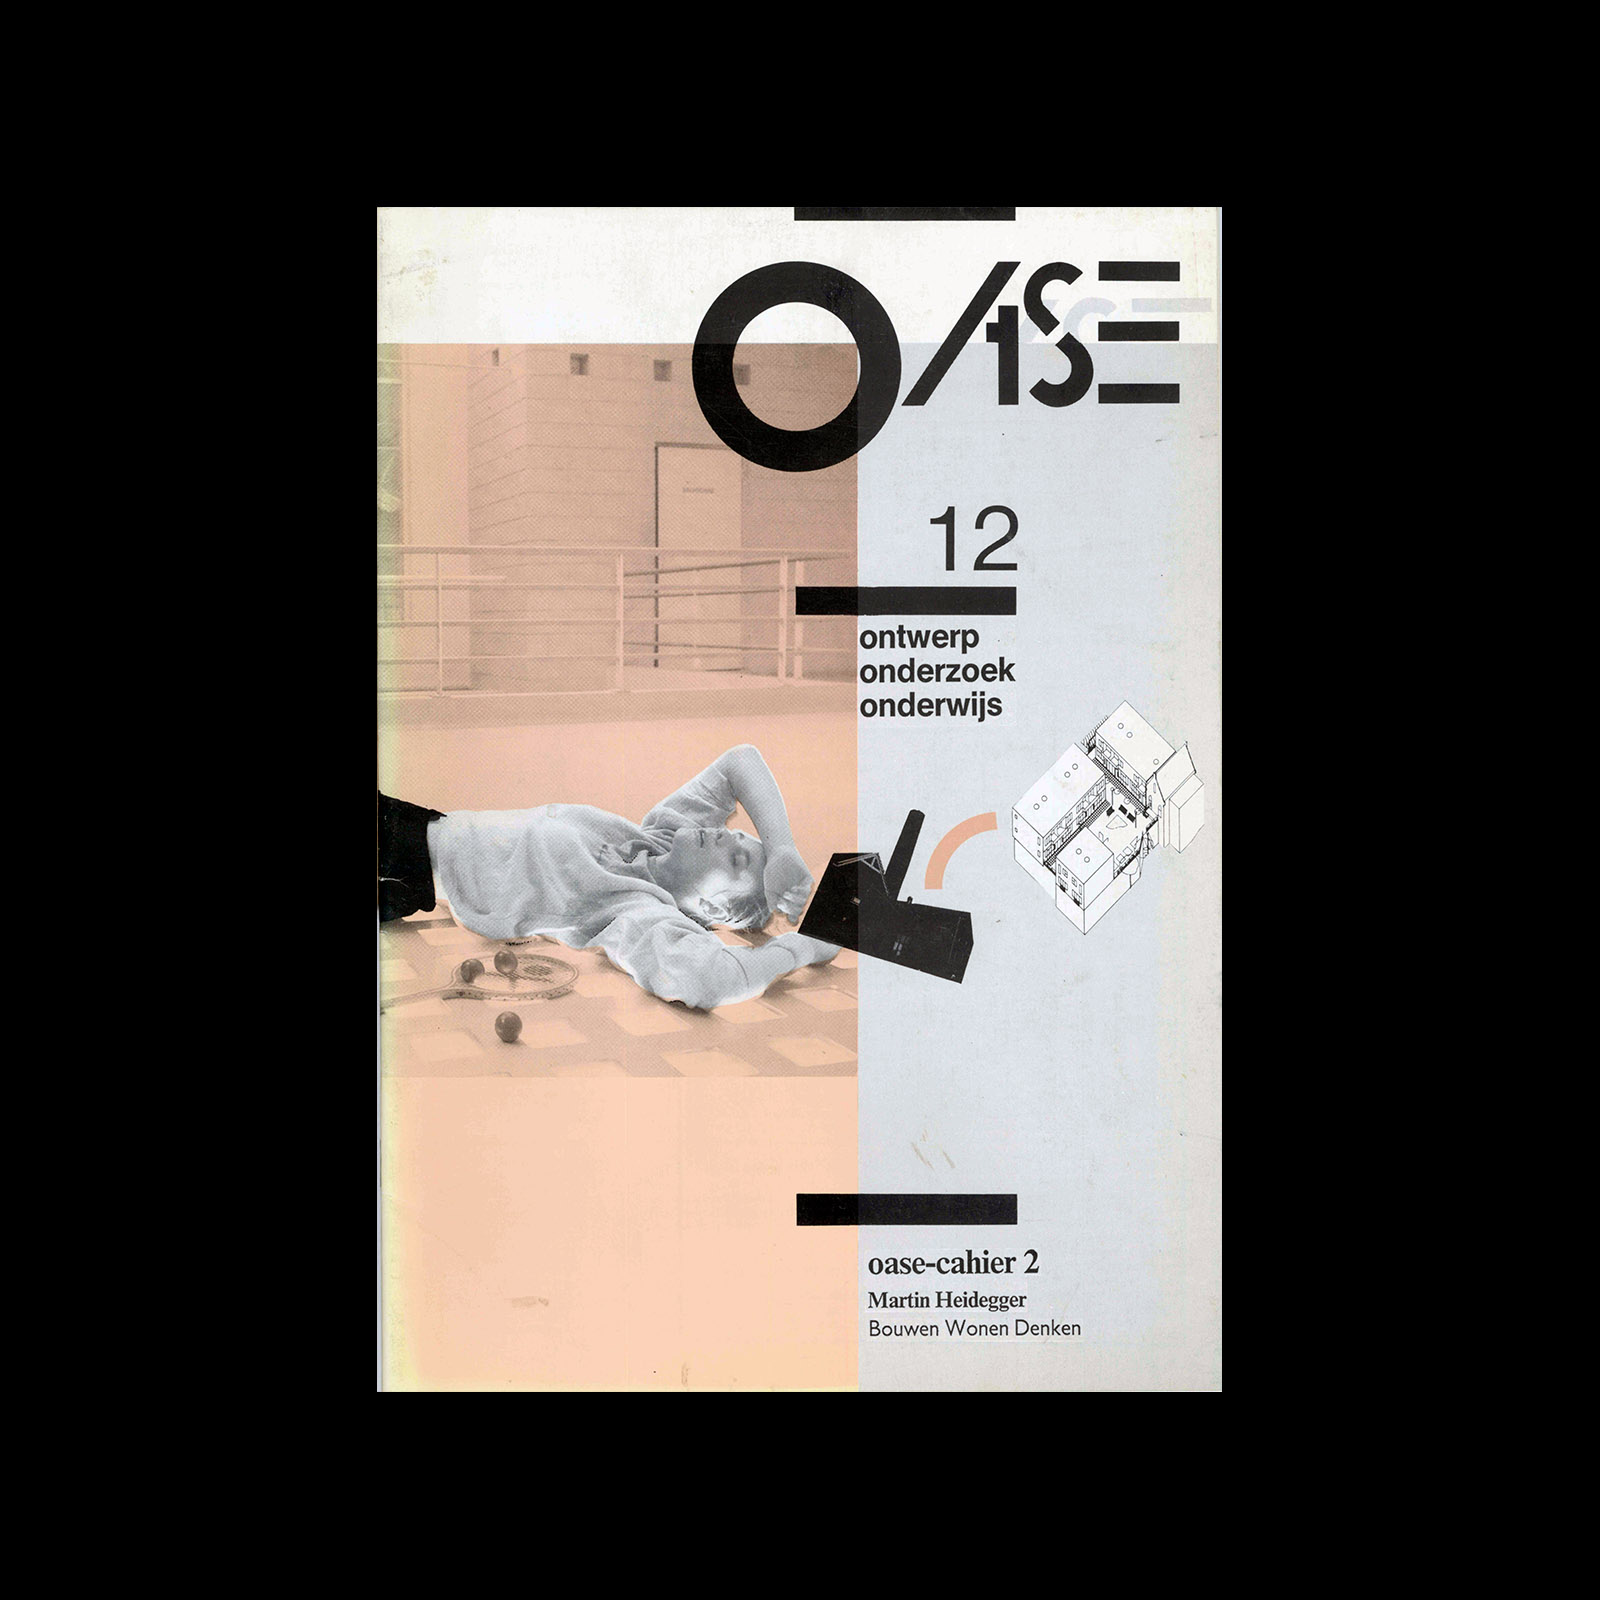 OASE 12, 1986. Designed by Daan ter Avest, HOI Studio